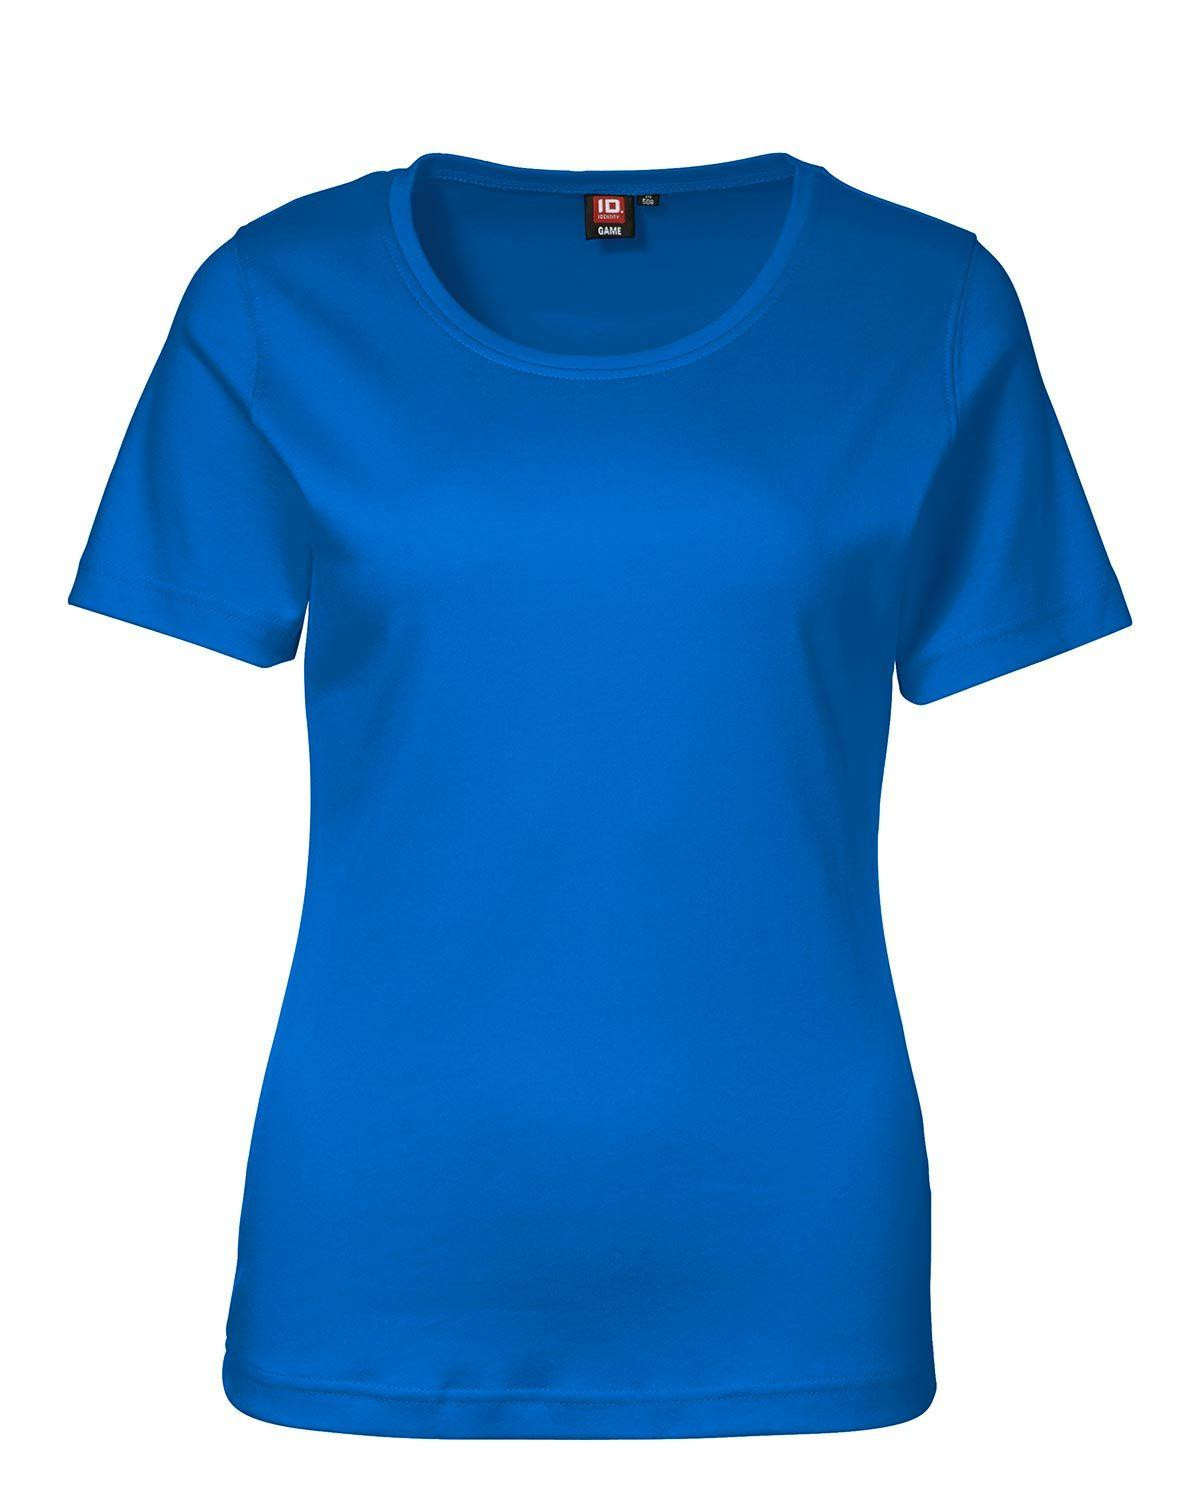 ID Interlock T-shirt til Kvinder (Azure, M)